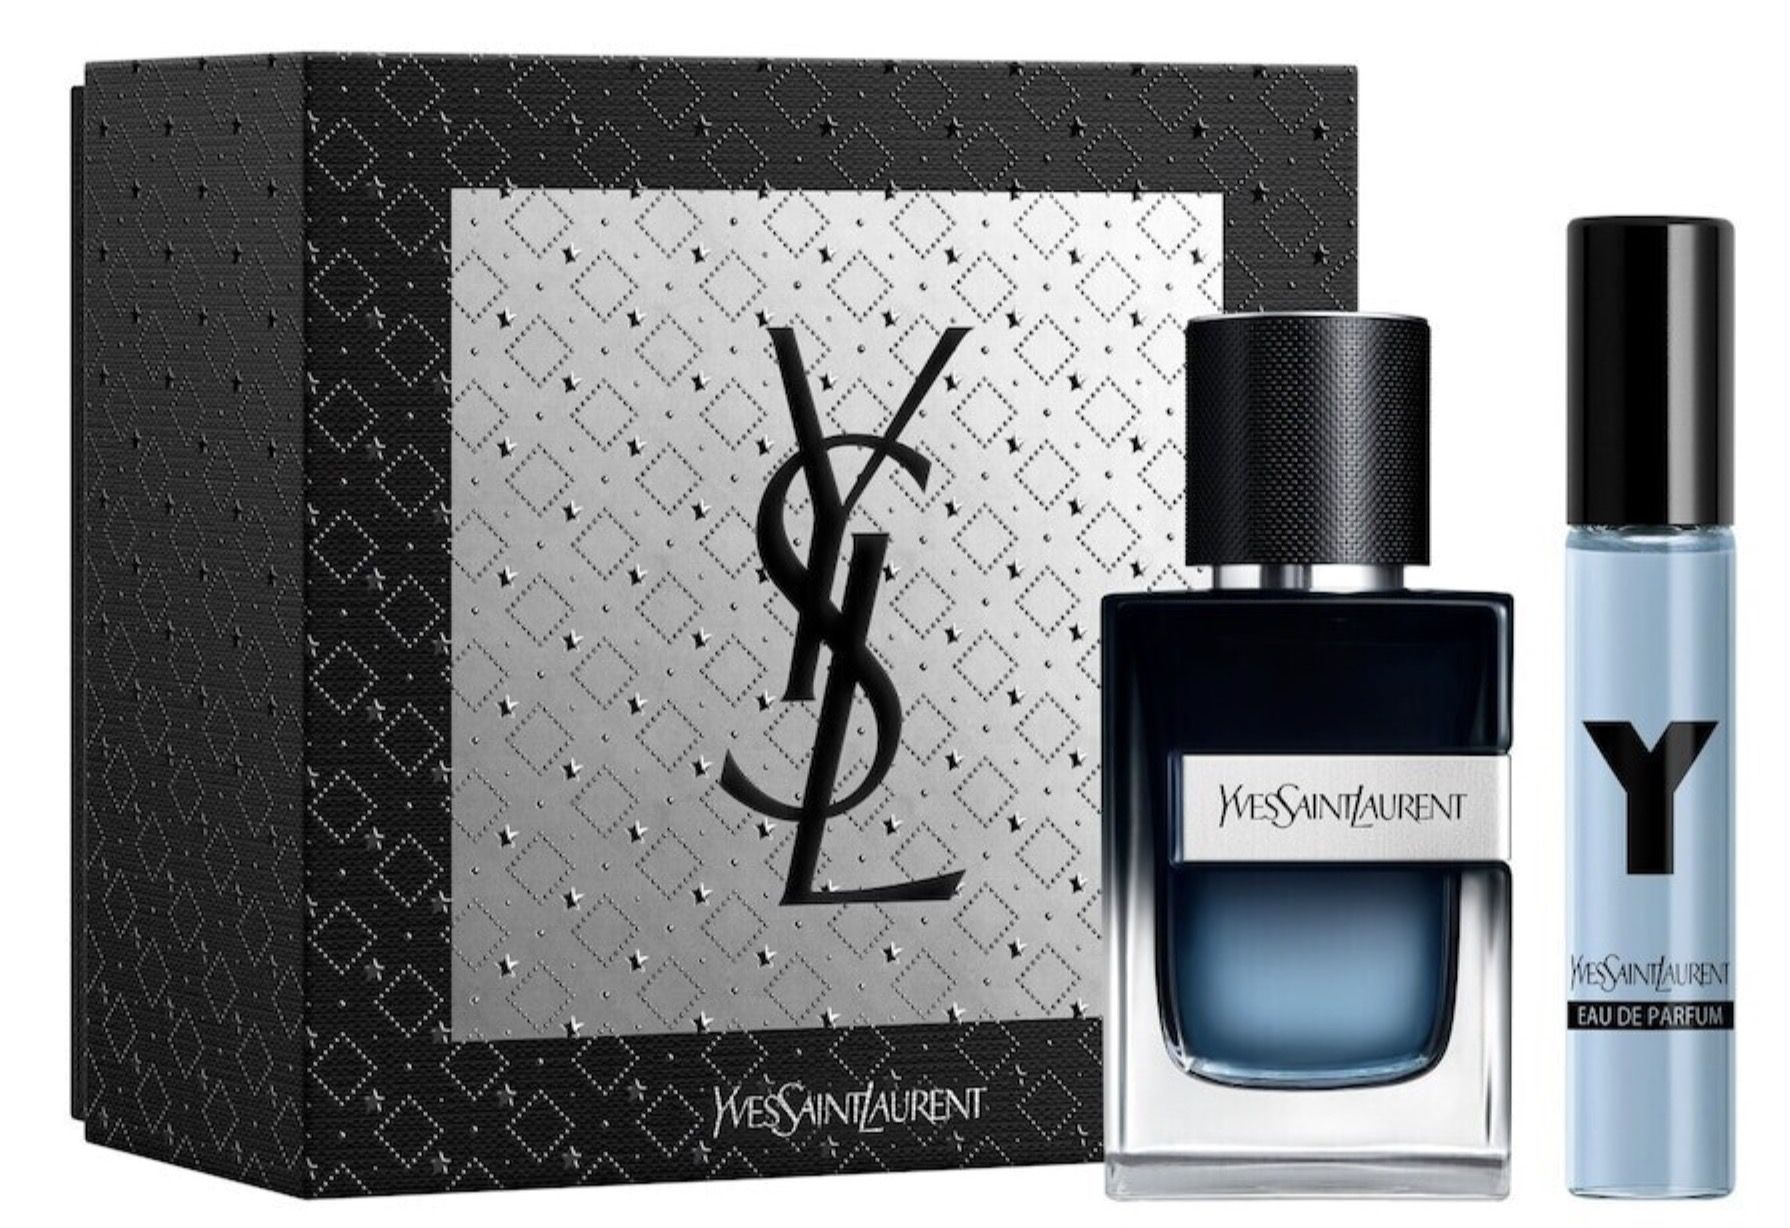 Yves Saint Laurent Y Herren Eau de Parfum Set 60ml + 10ml für 51,95€ (statt 62€)